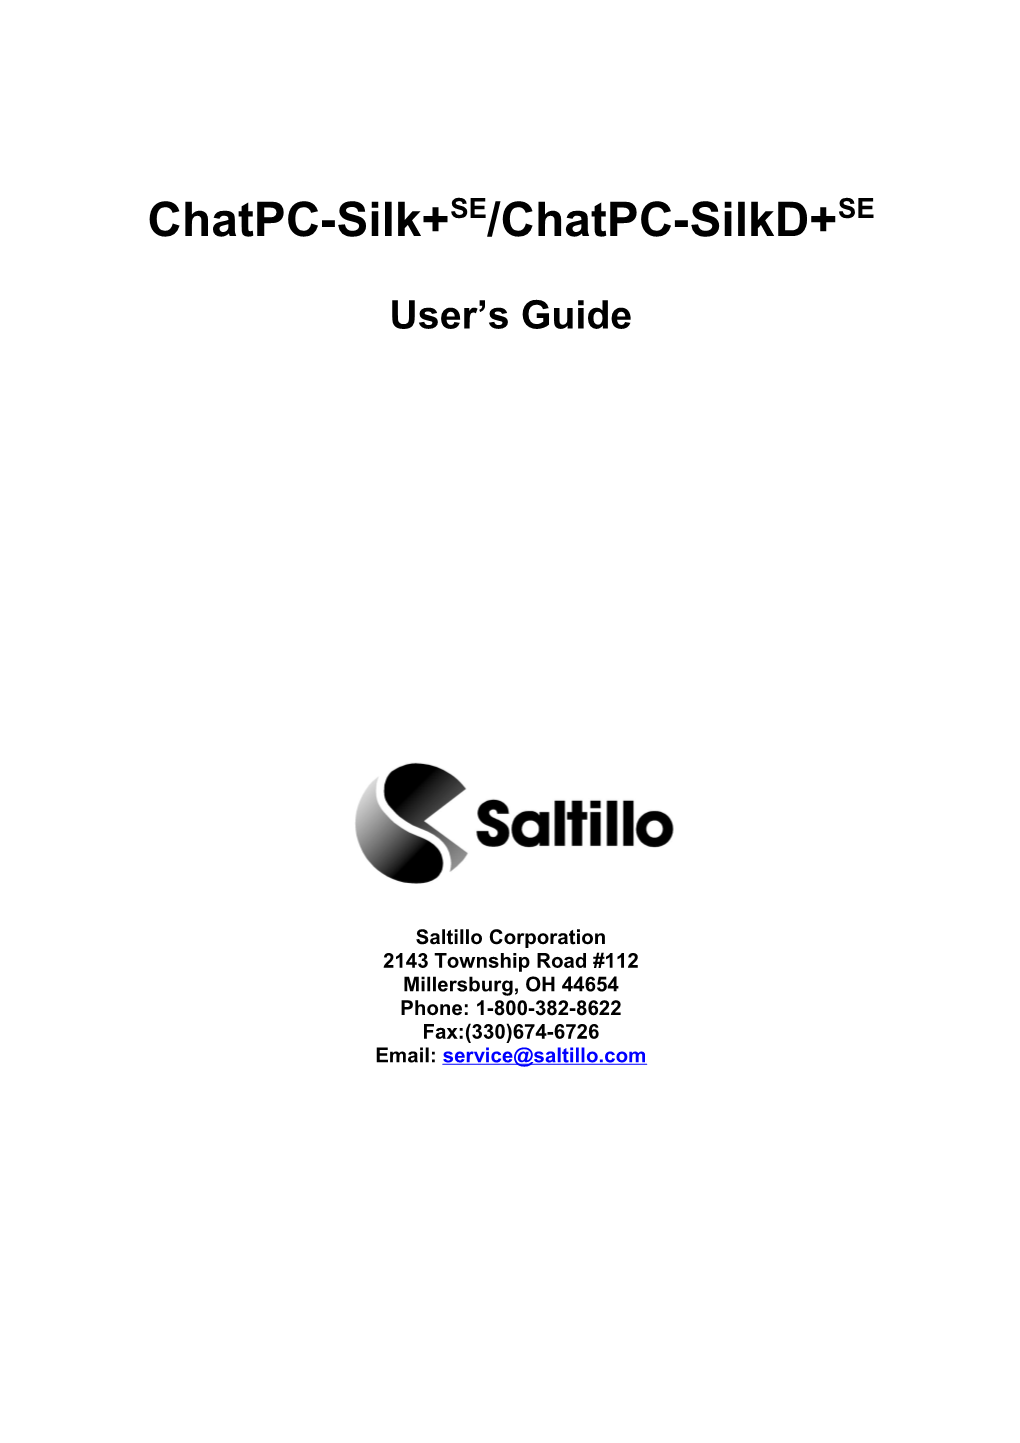 Chatpc-Silk+SE/Chatpc-Silkd+SE